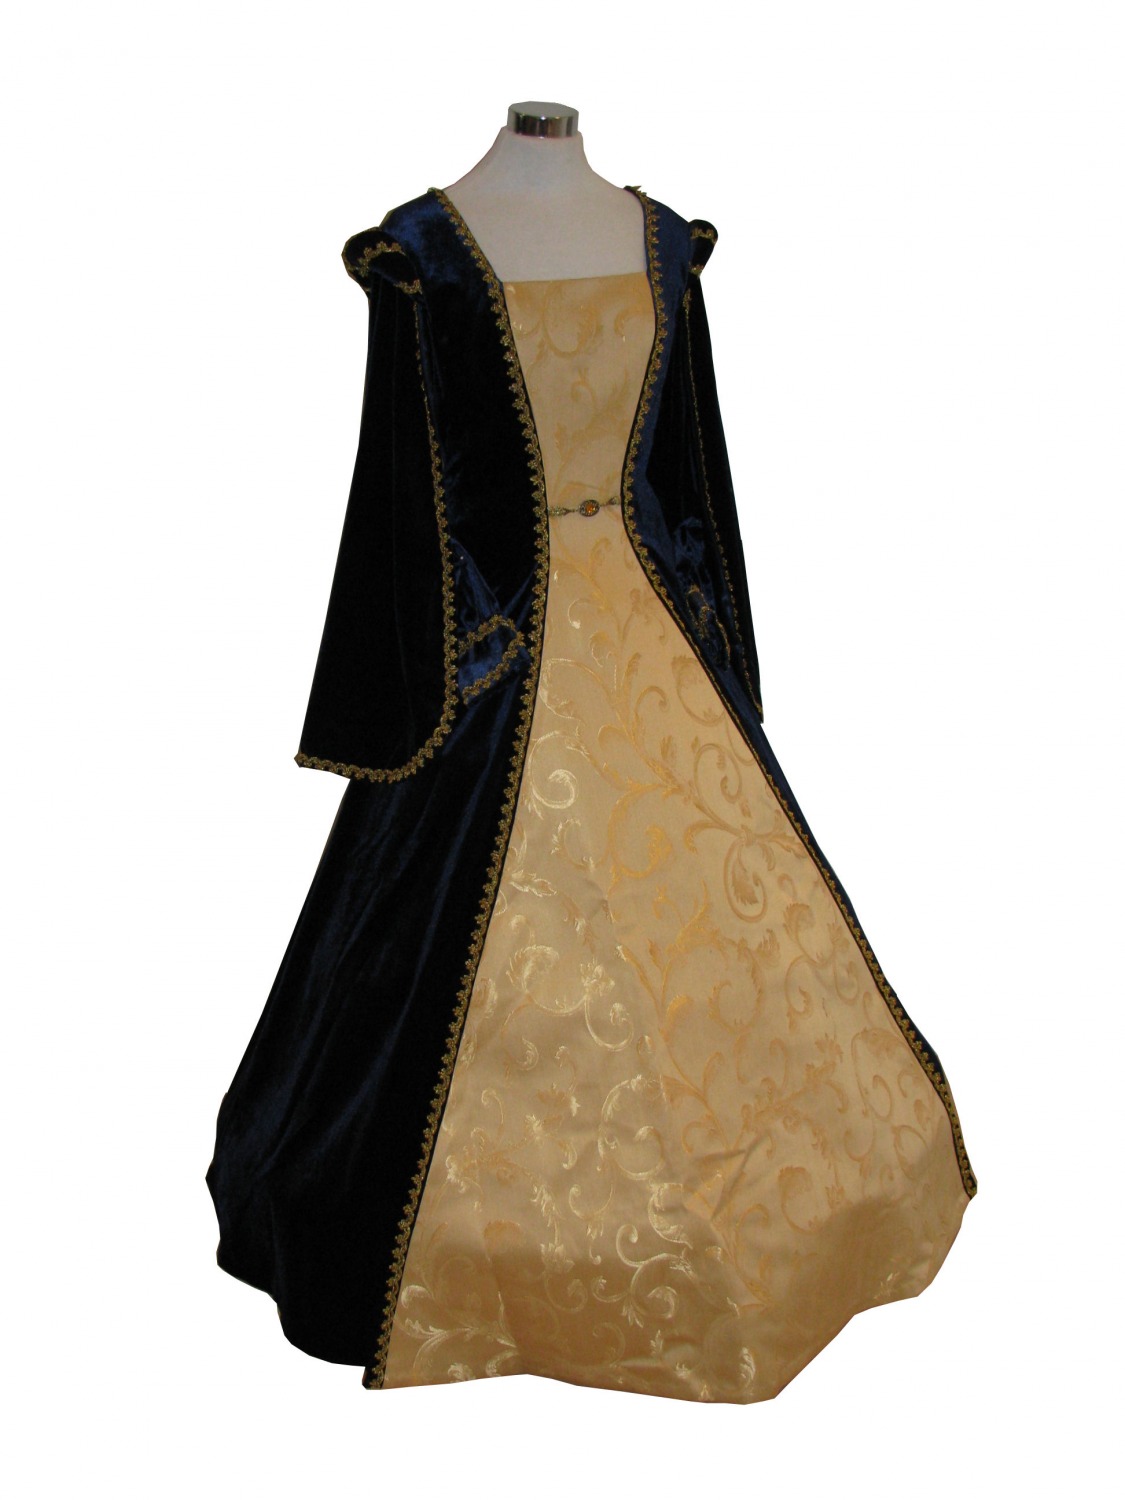 Ladies Medieval Tudor Ann Boleyn Costume And Headdress Size 12 - 14 Image